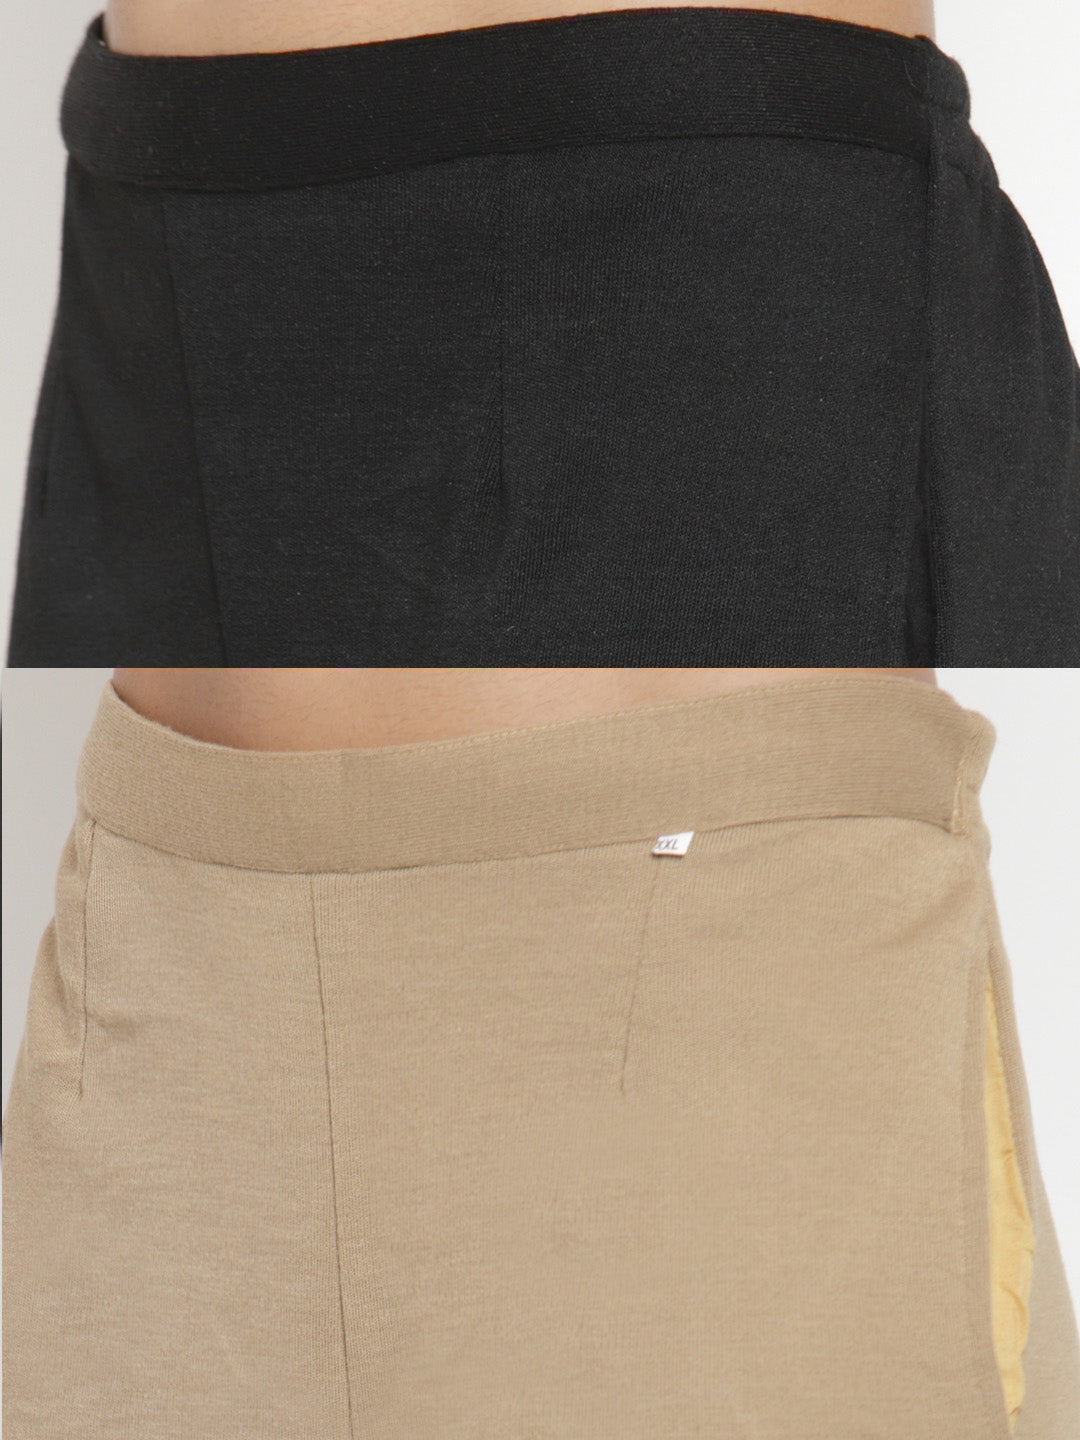 Clora Black & Light Fawn Solid Woolen Trouser (Pack of 2)